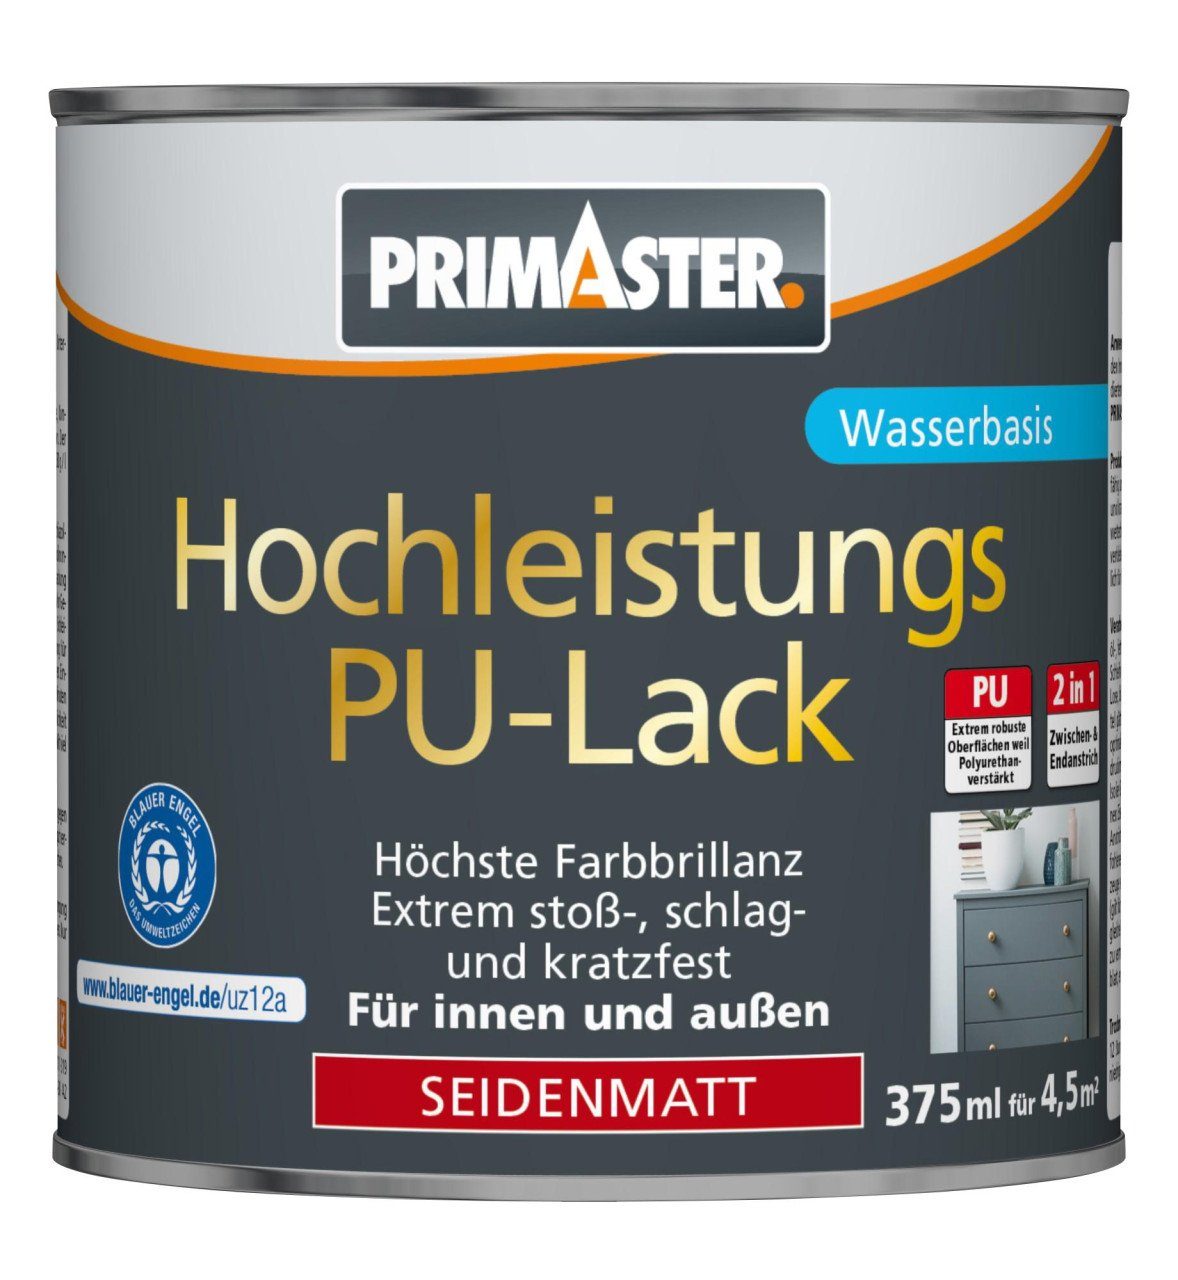 Primaster Acryl-Buntlack Hochleistungs-PU-Lack RAL 9005 ml 375 Primaster